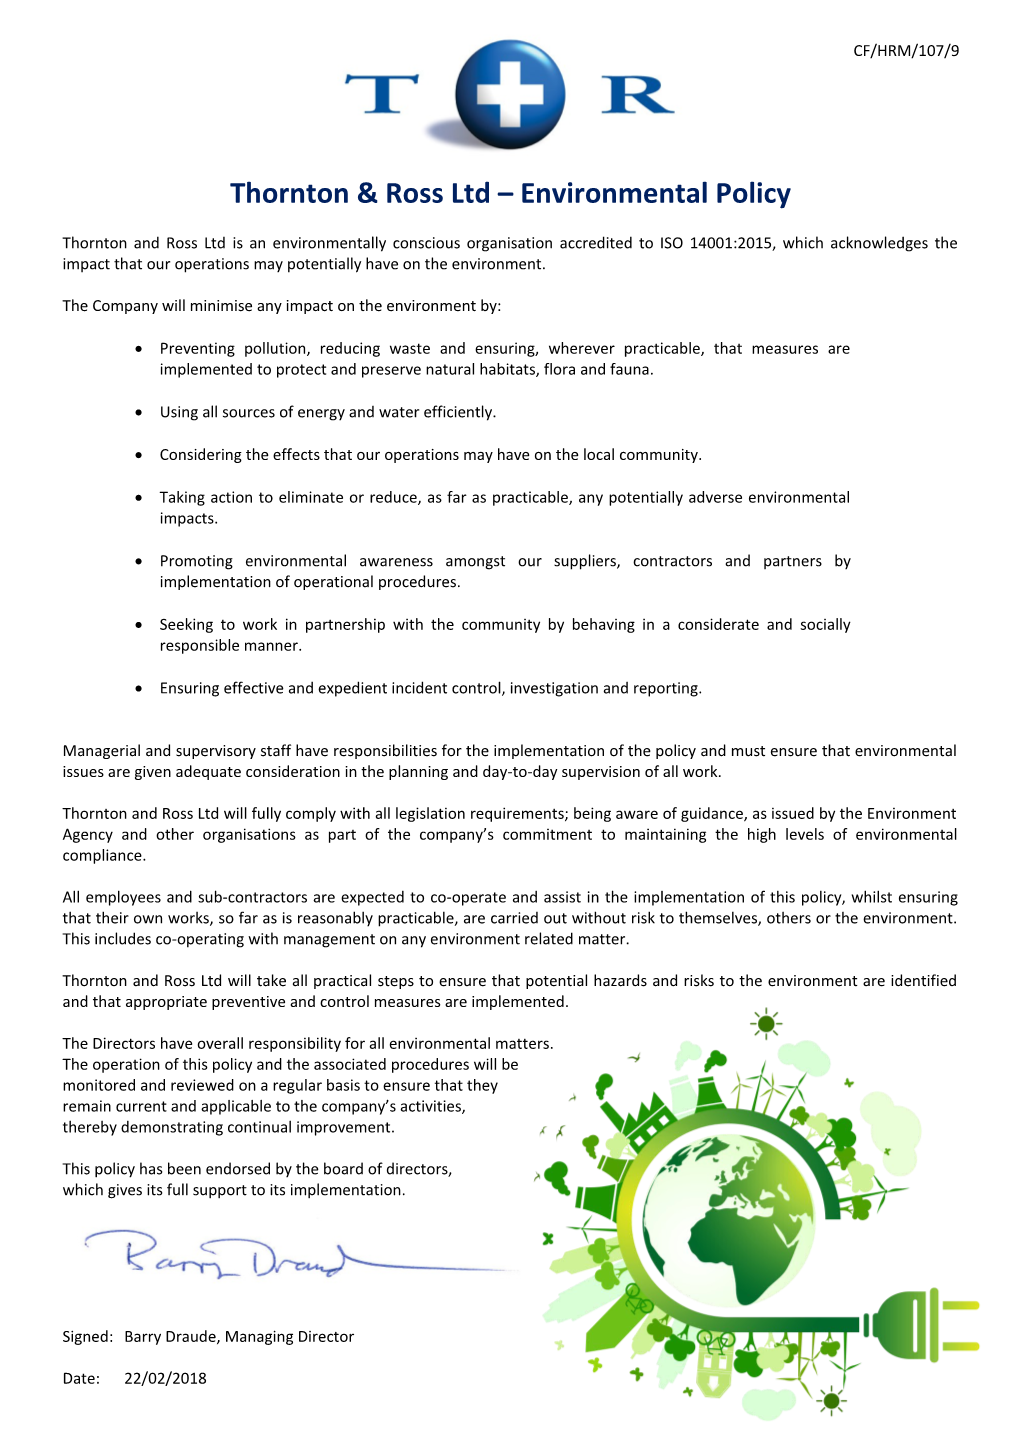 Thornton & Ross Ltd Environmental Policy